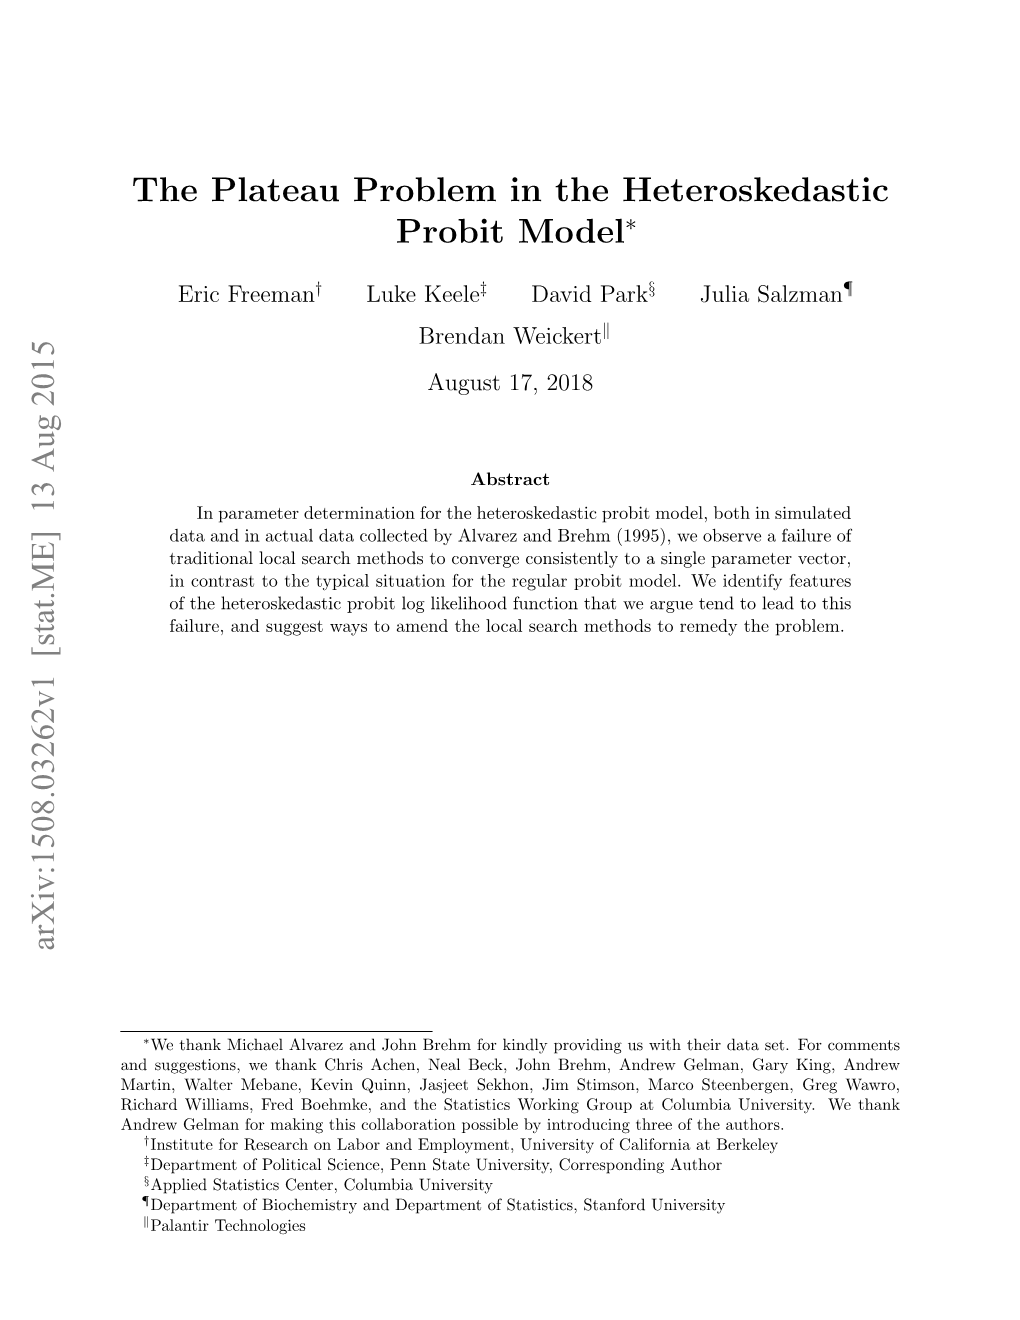 The Plateau Problem in the Heteroskedastic Probit Model Arxiv:1508.03262V1 [Stat.ME] 13 Aug 2015